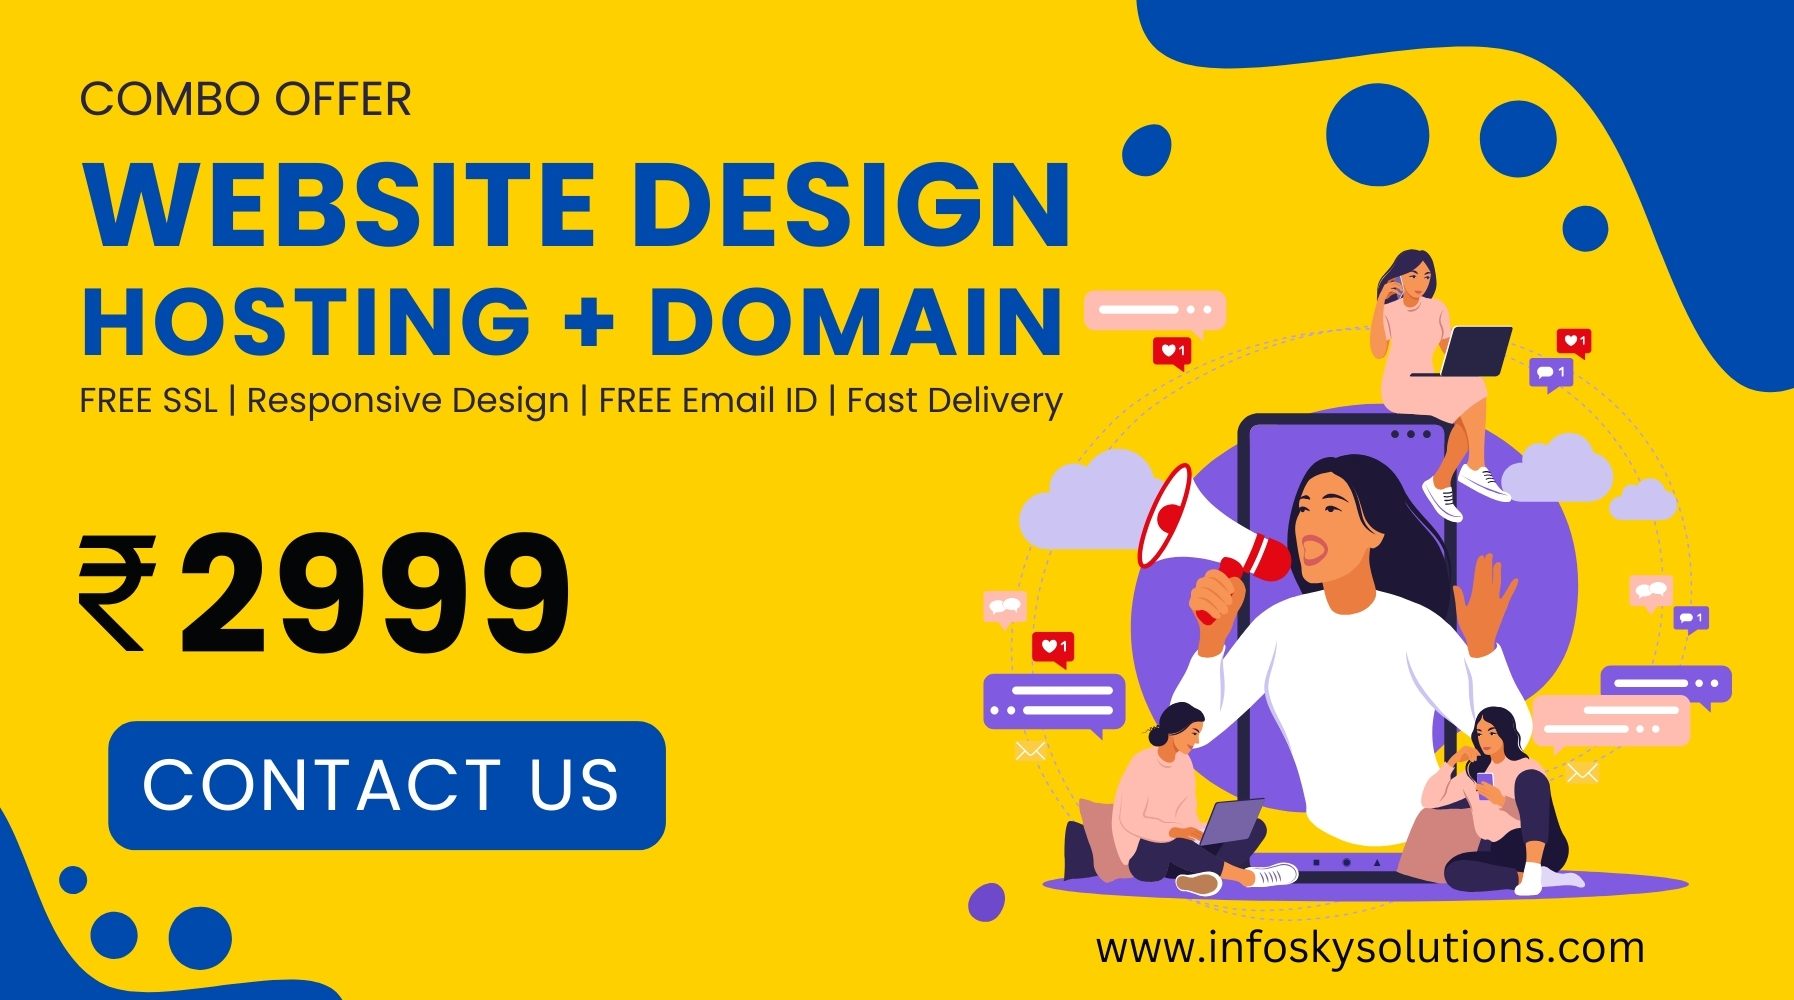 Website Design, Domain, Hosting Combo Offer image from Infosky Solutions